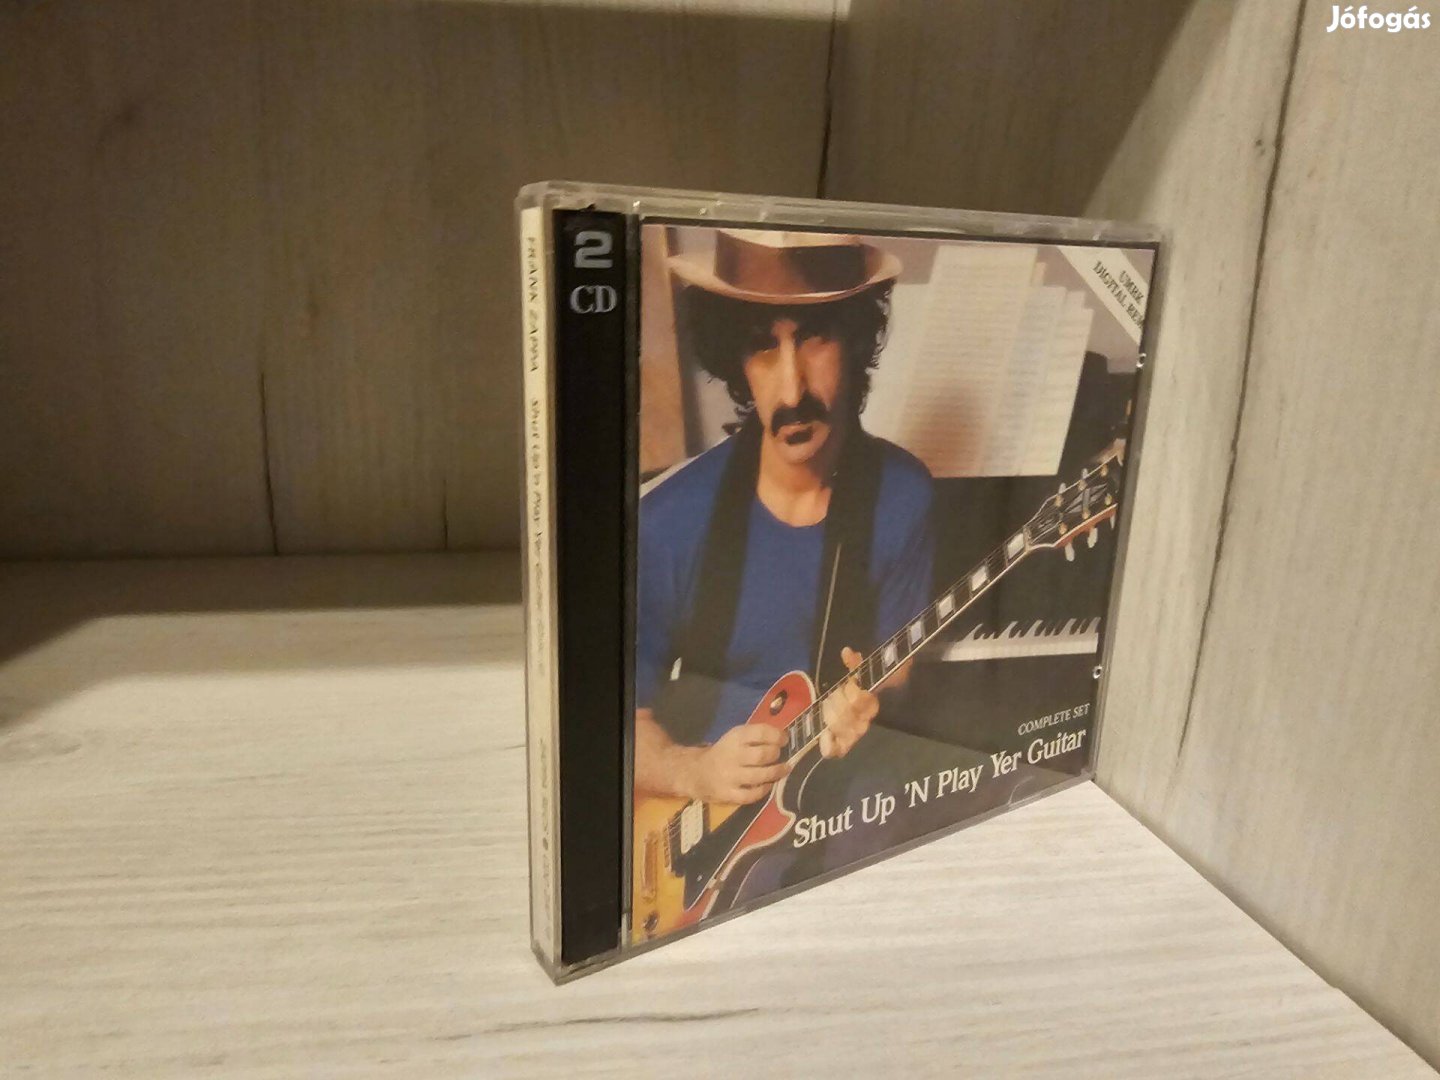 Frank Zappa Shut Up 'n Play Yer Guitar dupla CD